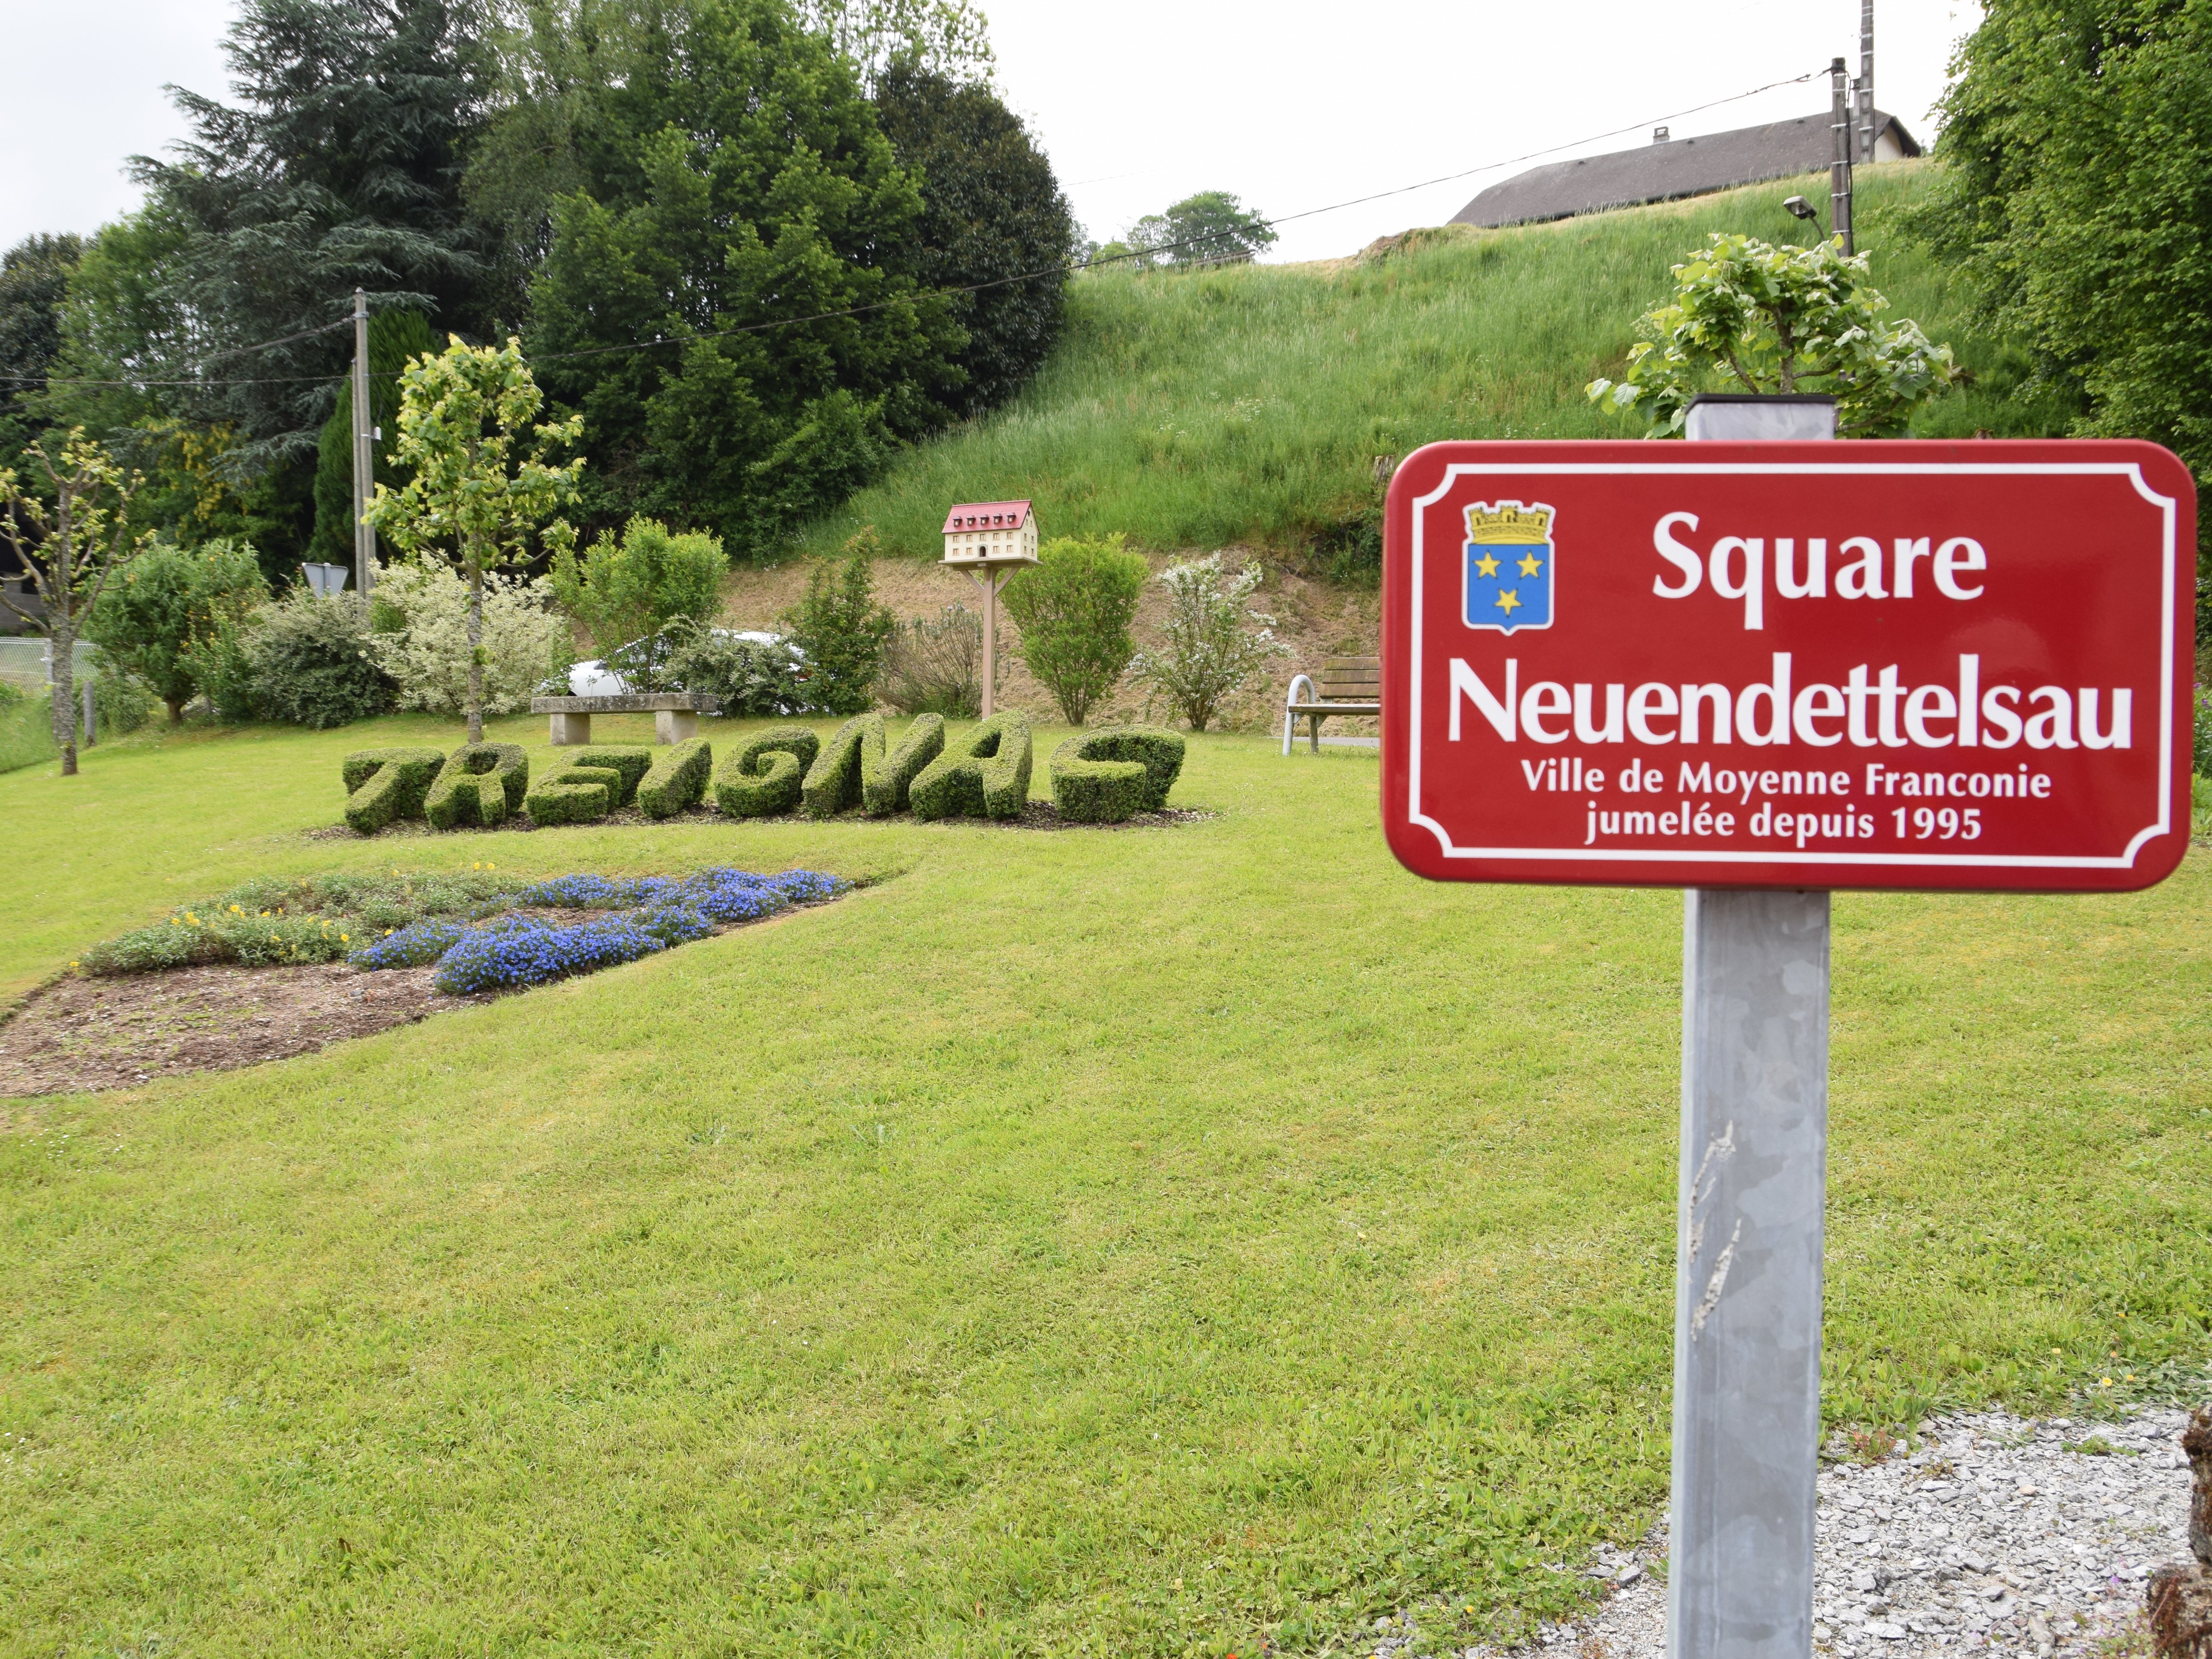 Square Neuendettelsau in Treignac